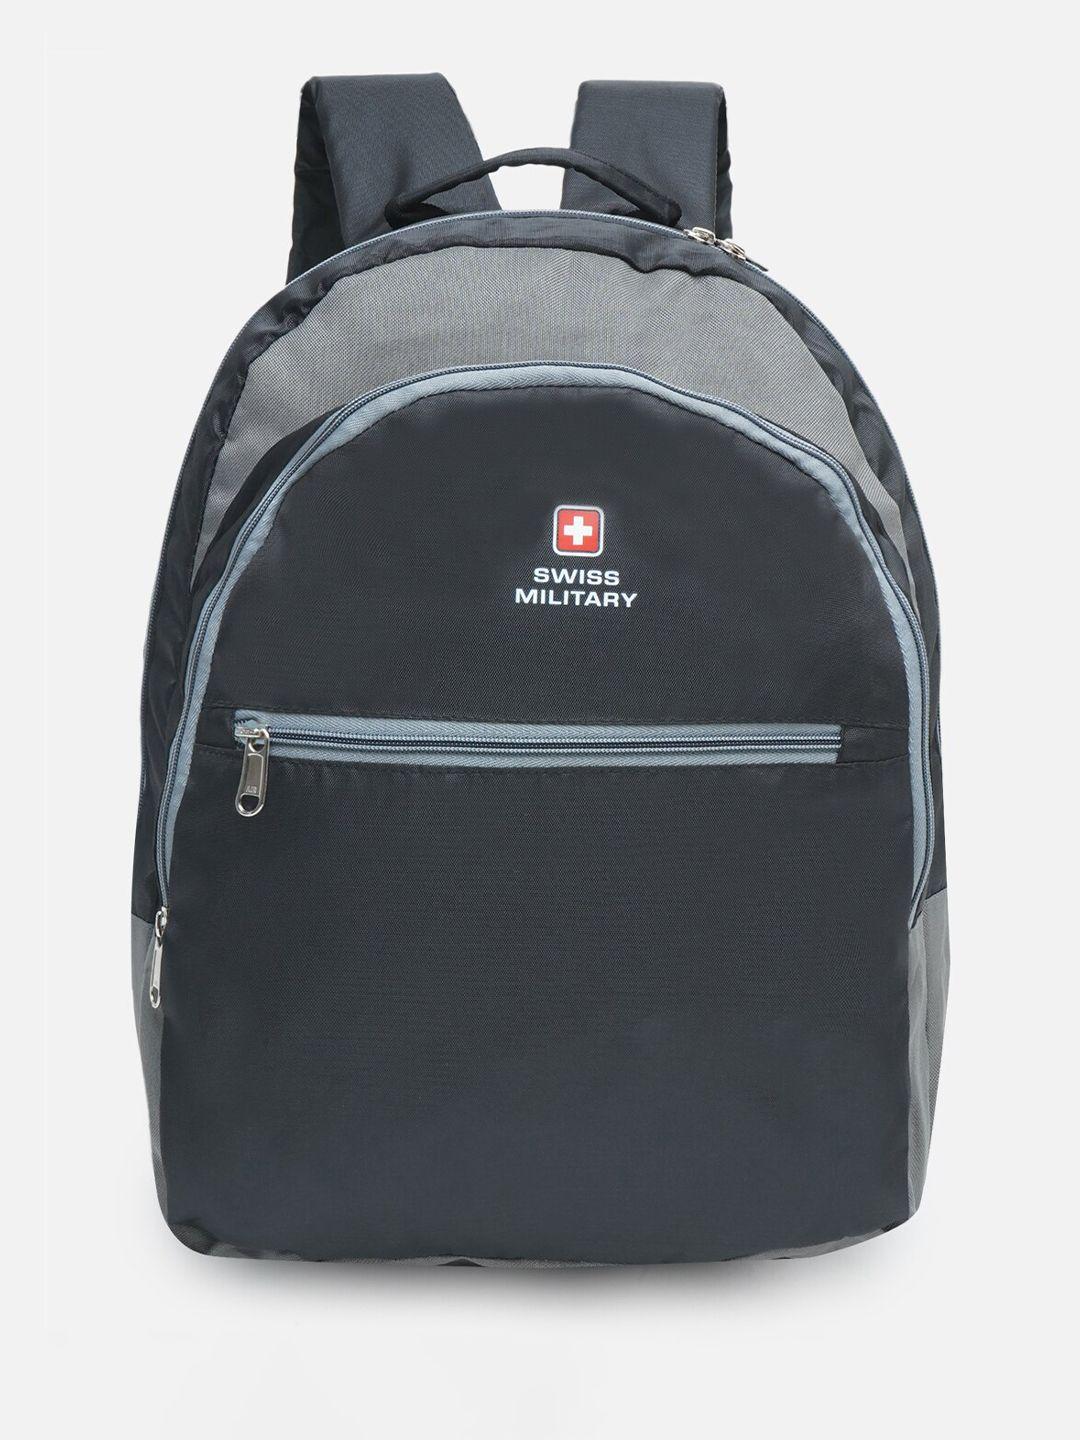 swiss military unisex brand logo ergonomic backpack